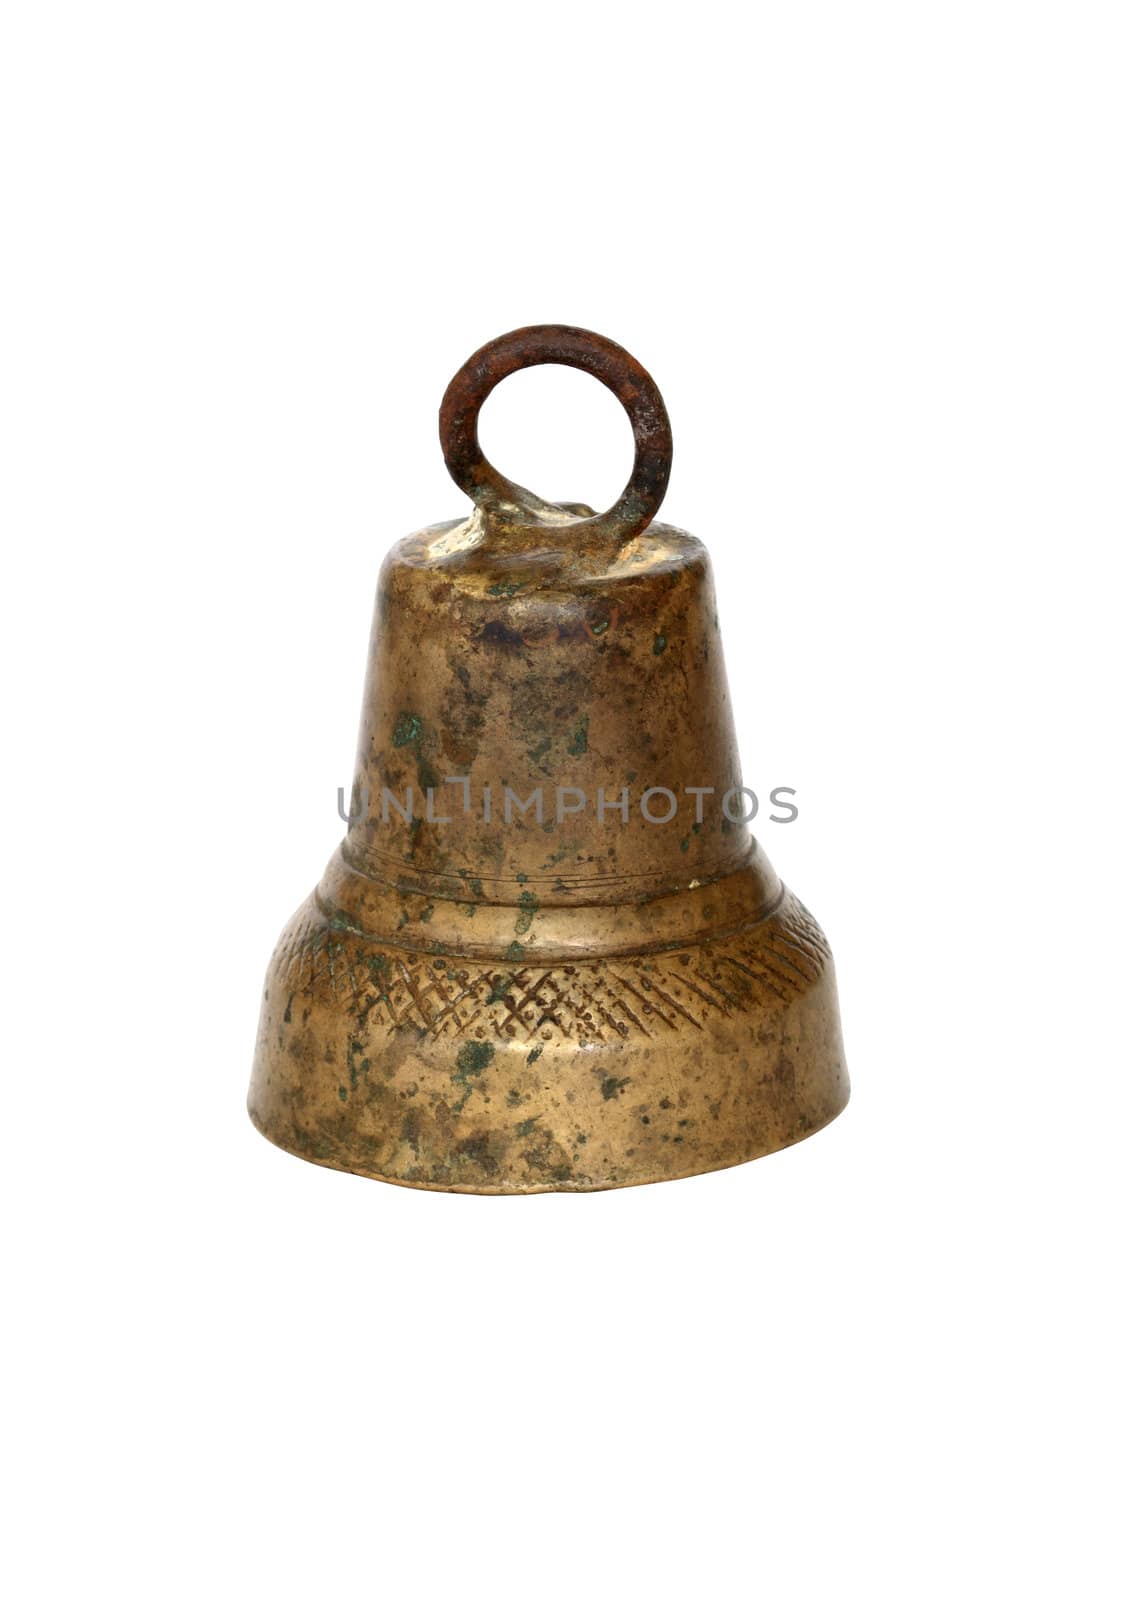 Old Brass Bell by kvkirillov